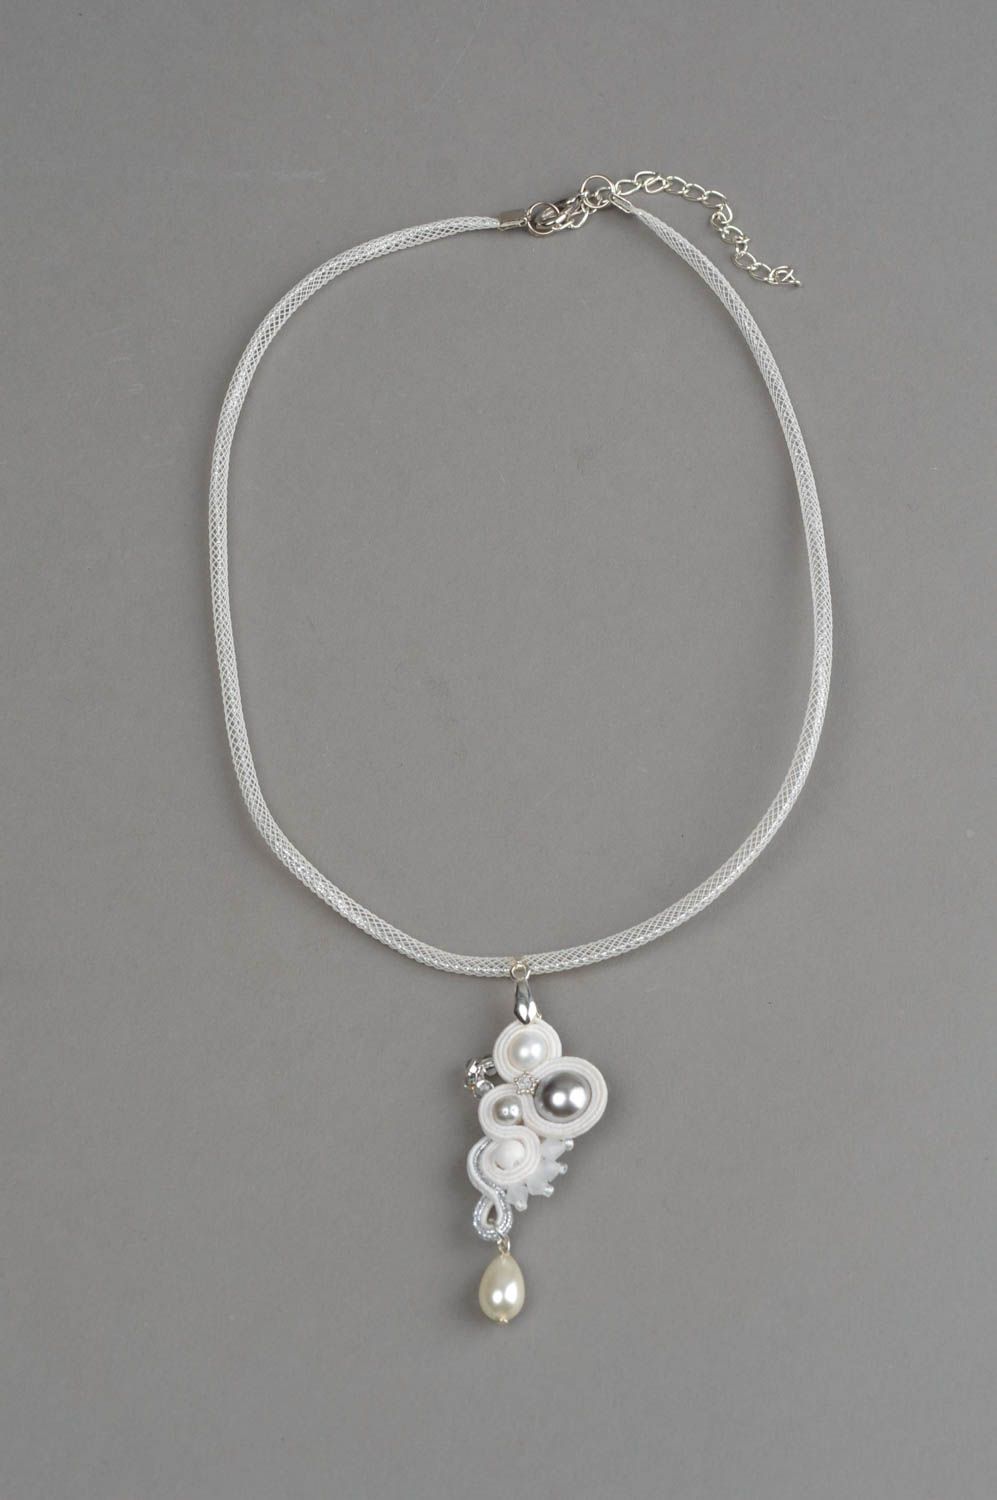 Handmade beautiful pendant soutache unusual accessory cute stylish jewelry photo 2